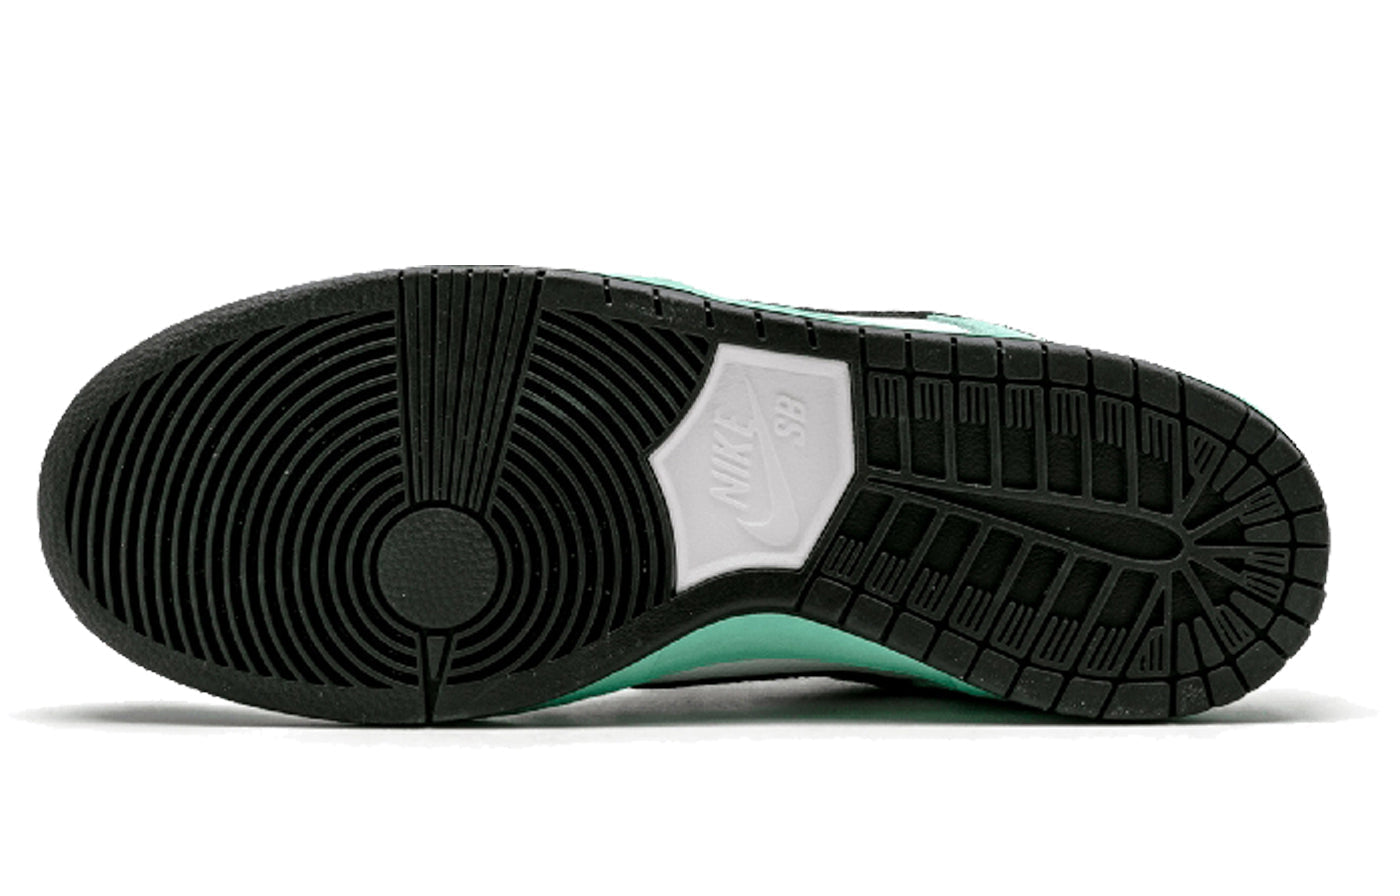 Nike SB Skateboard Dunk Low IW Sea Crystal Green Glow 819674-301 sneakmarks